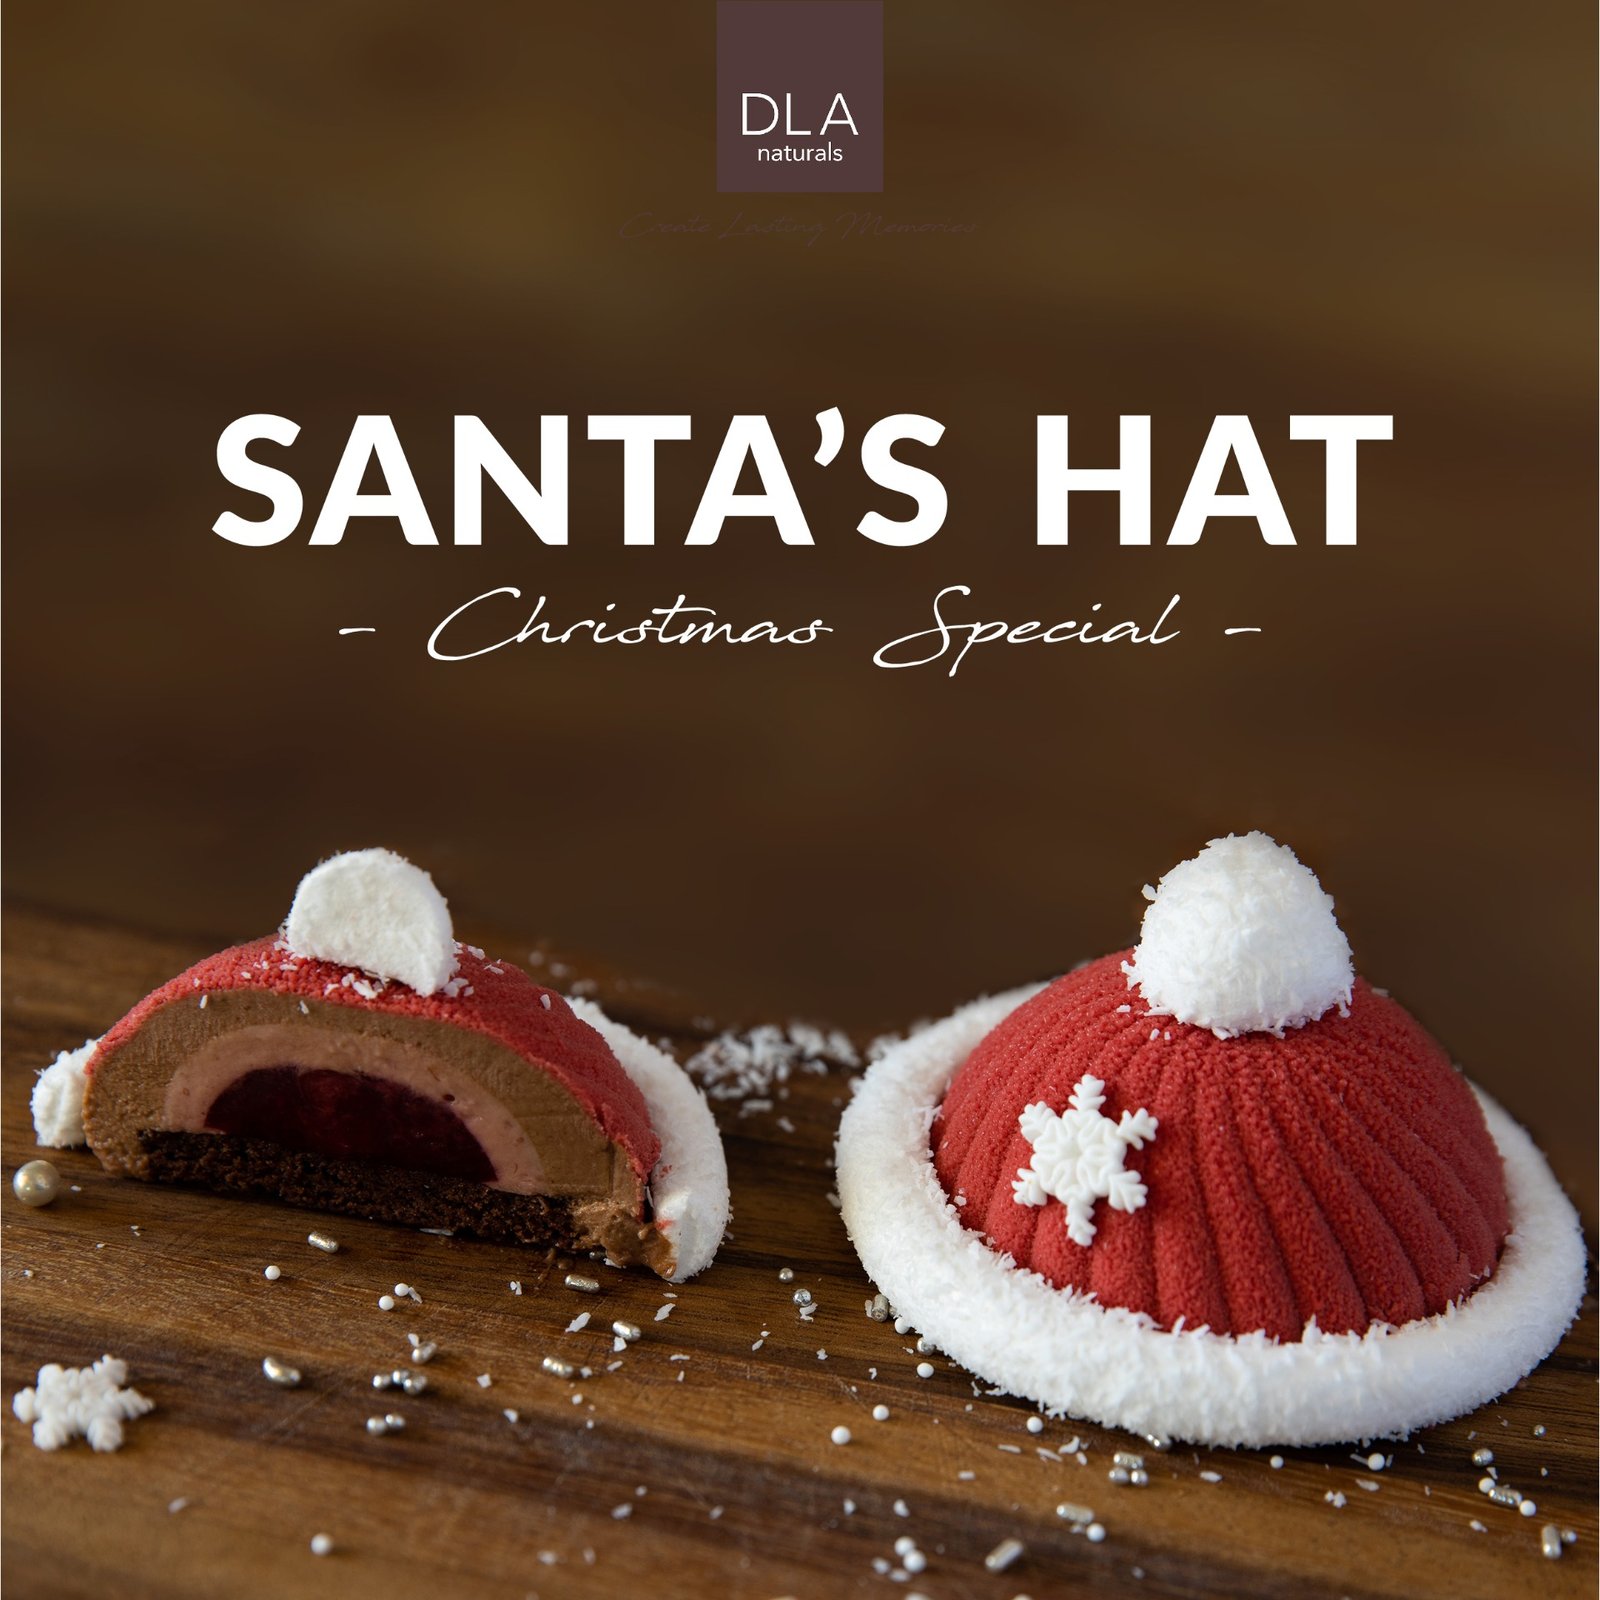 Santa's Hat Recipe